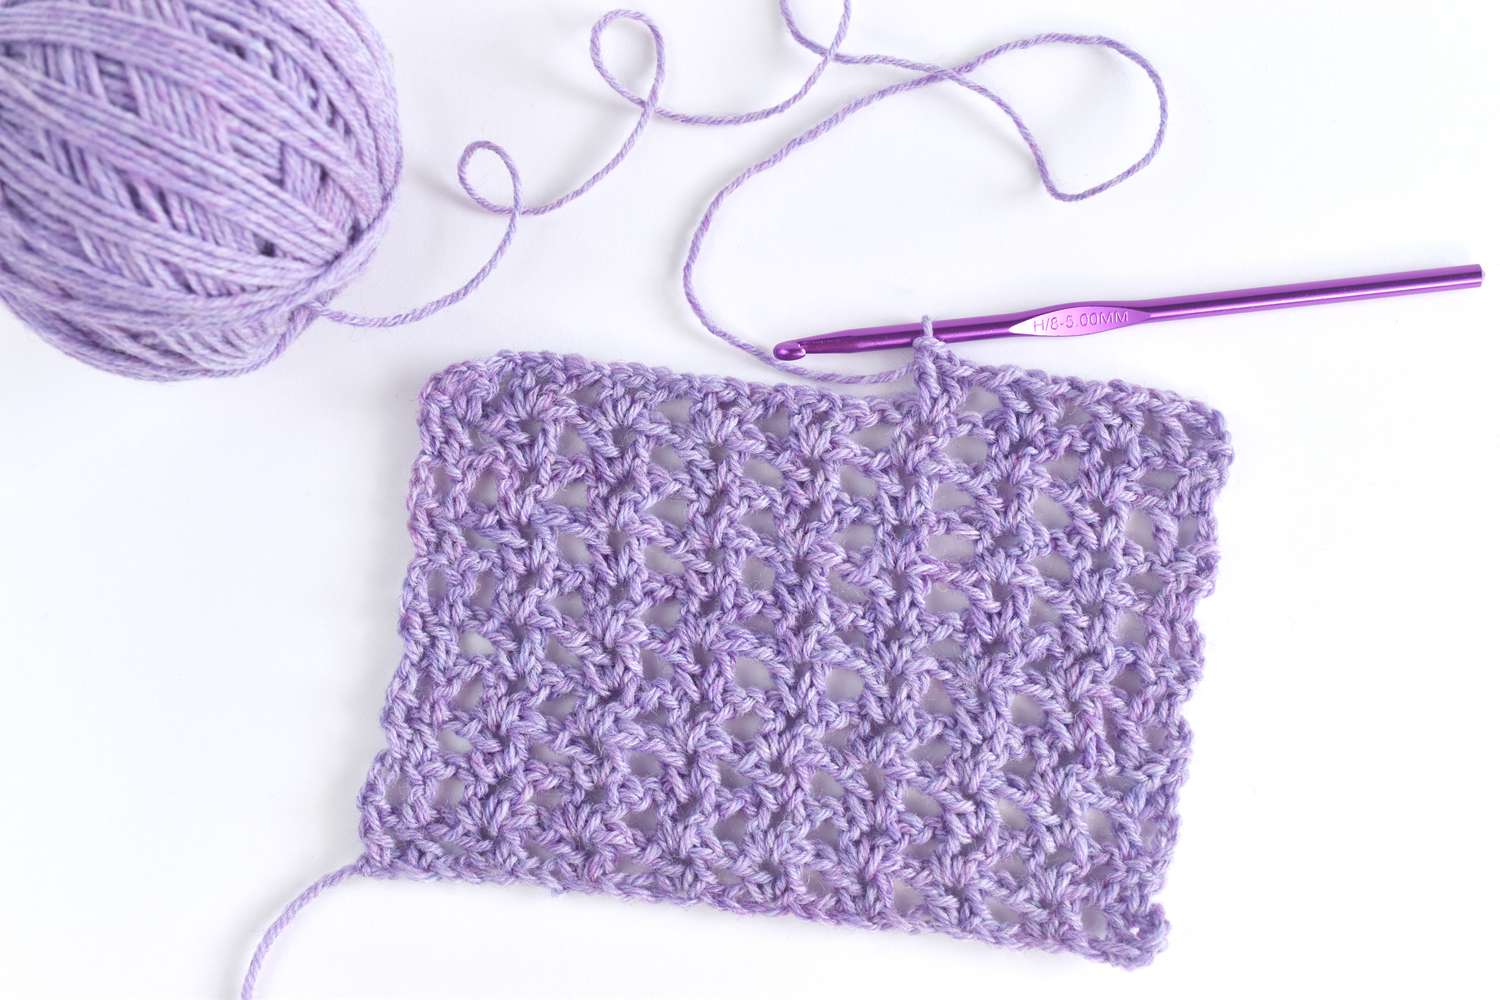 Crochet brick stitch